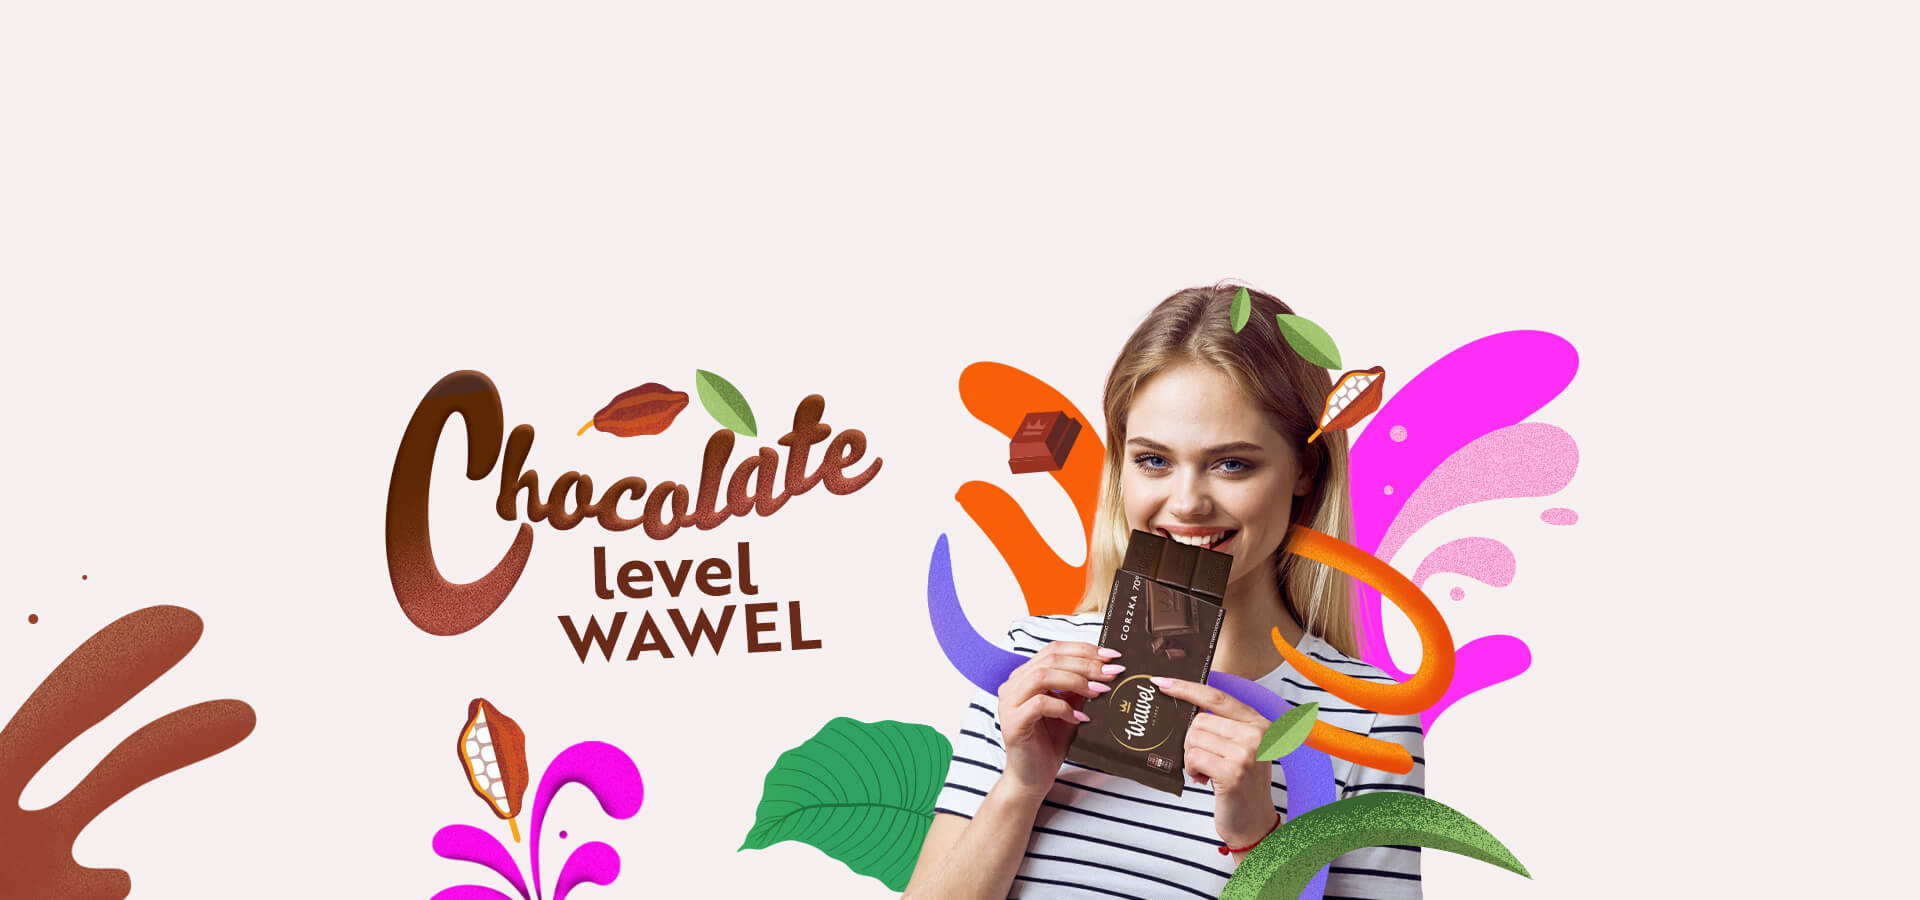 Chocolate level WAWEL